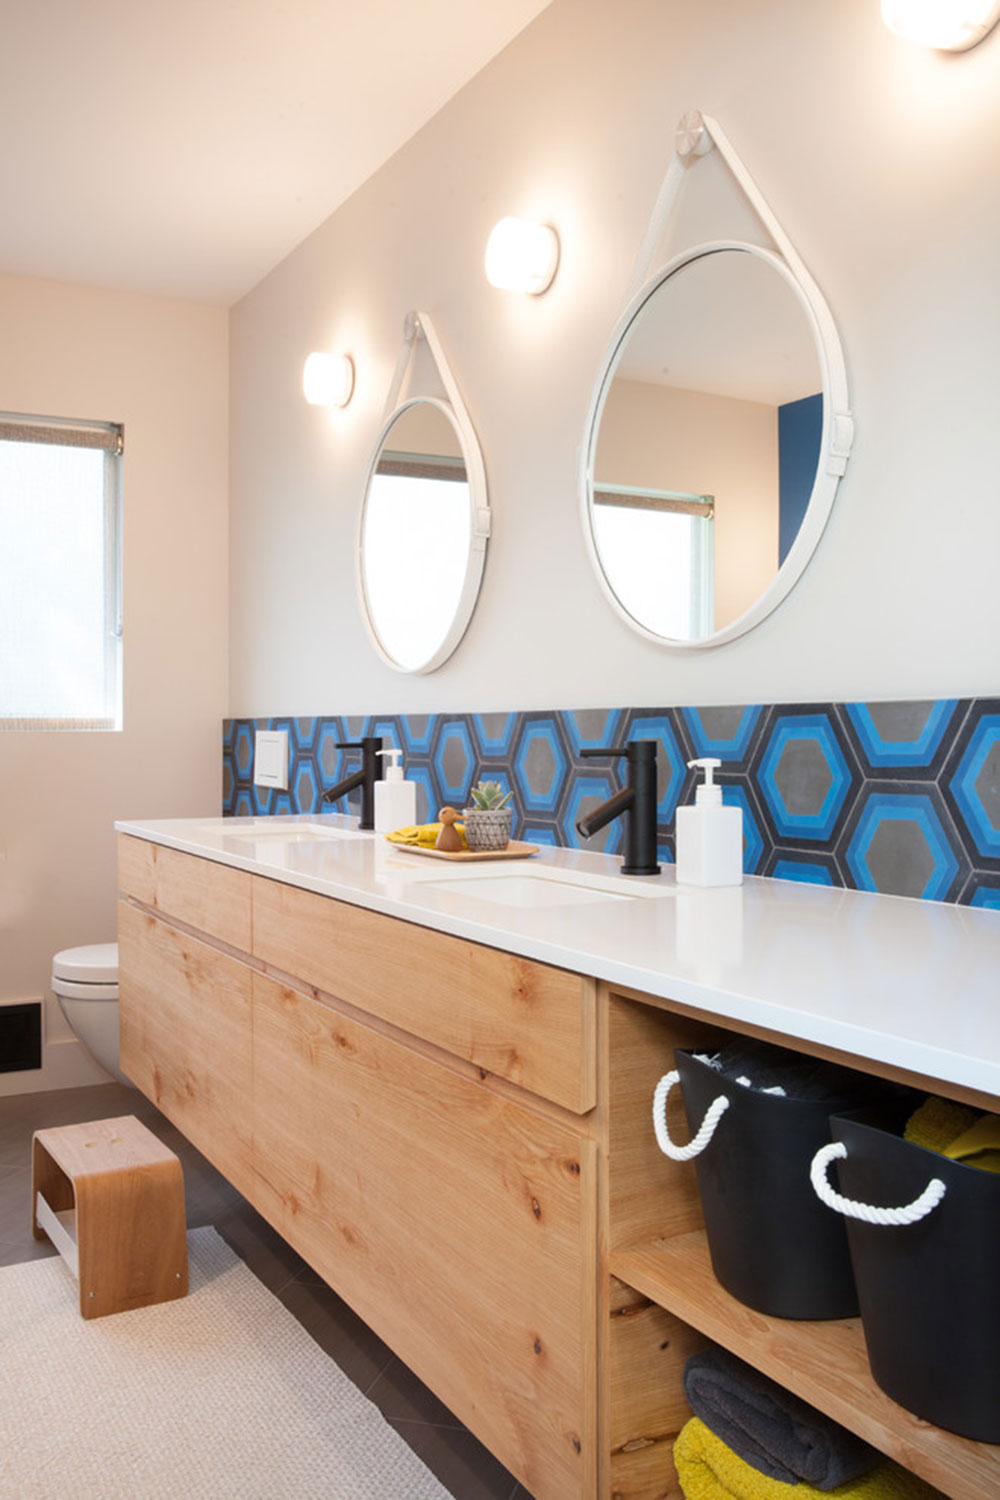 Palo-Alto-by-Kim-Betzina-Interiors Small bathroom remodel tips to do it properly